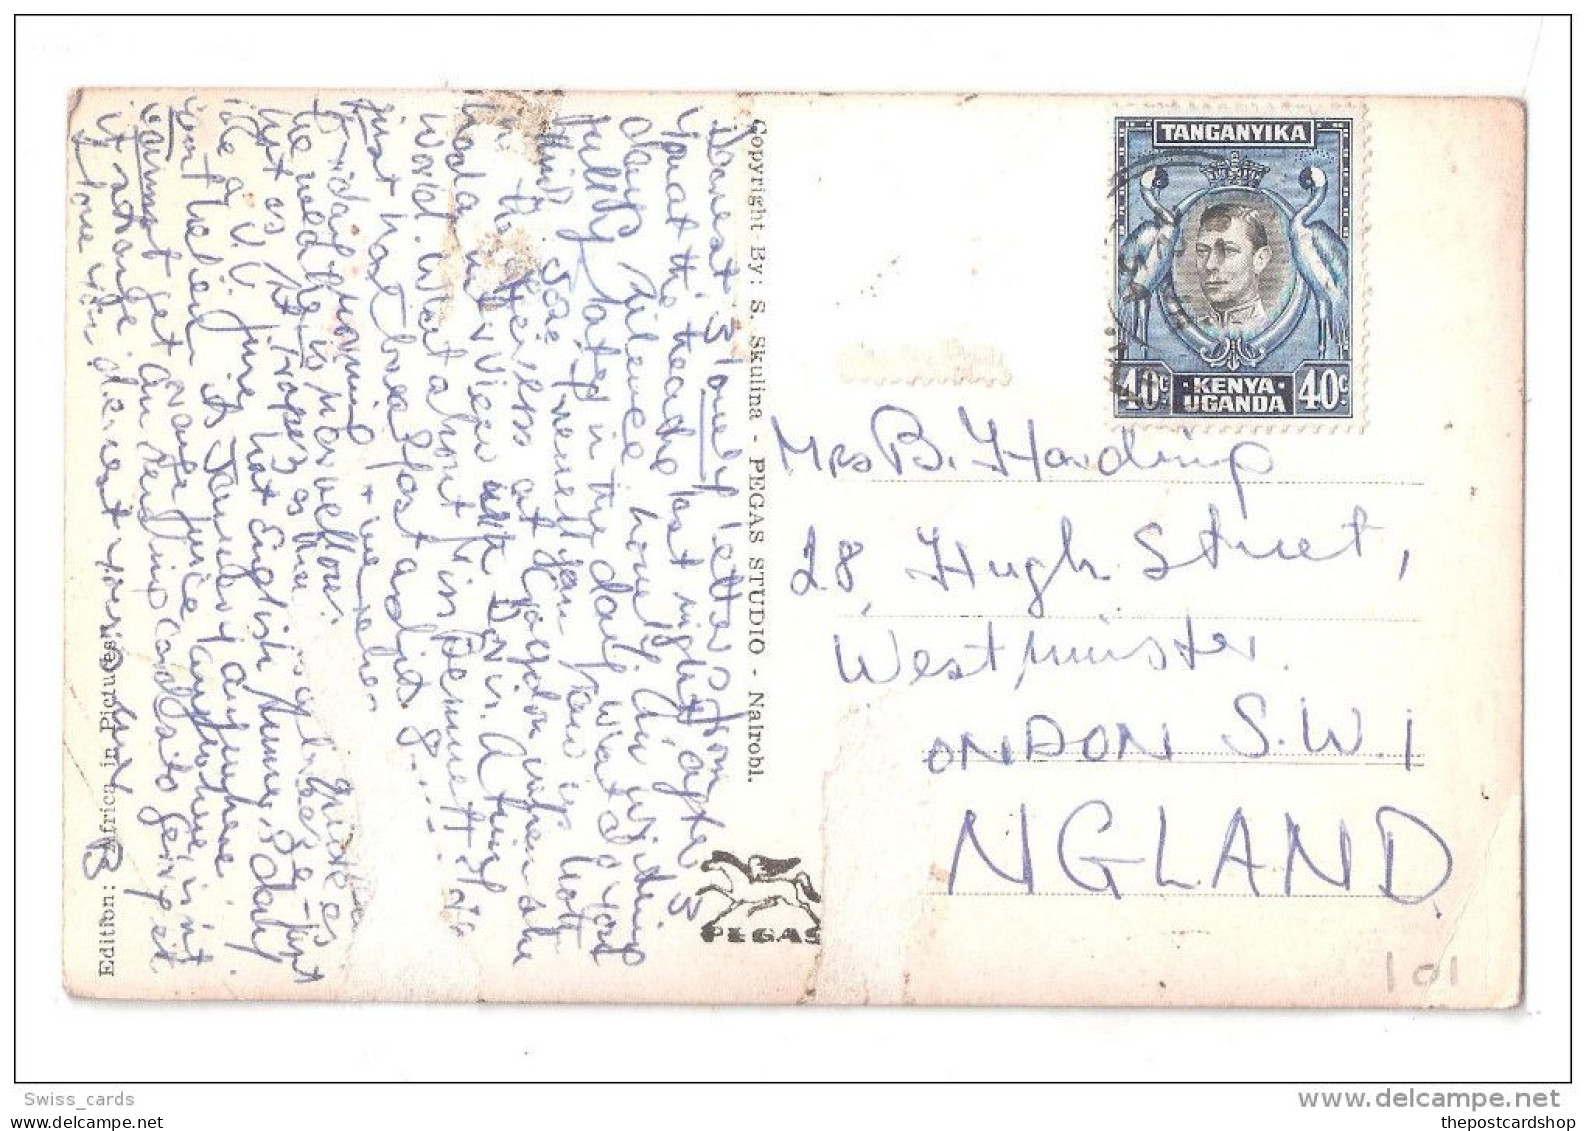 Uganda Kenya Tanganyika USED STAMPS Kenya GENERAL VIEW Nairobi 1950s Postcard - Kenia